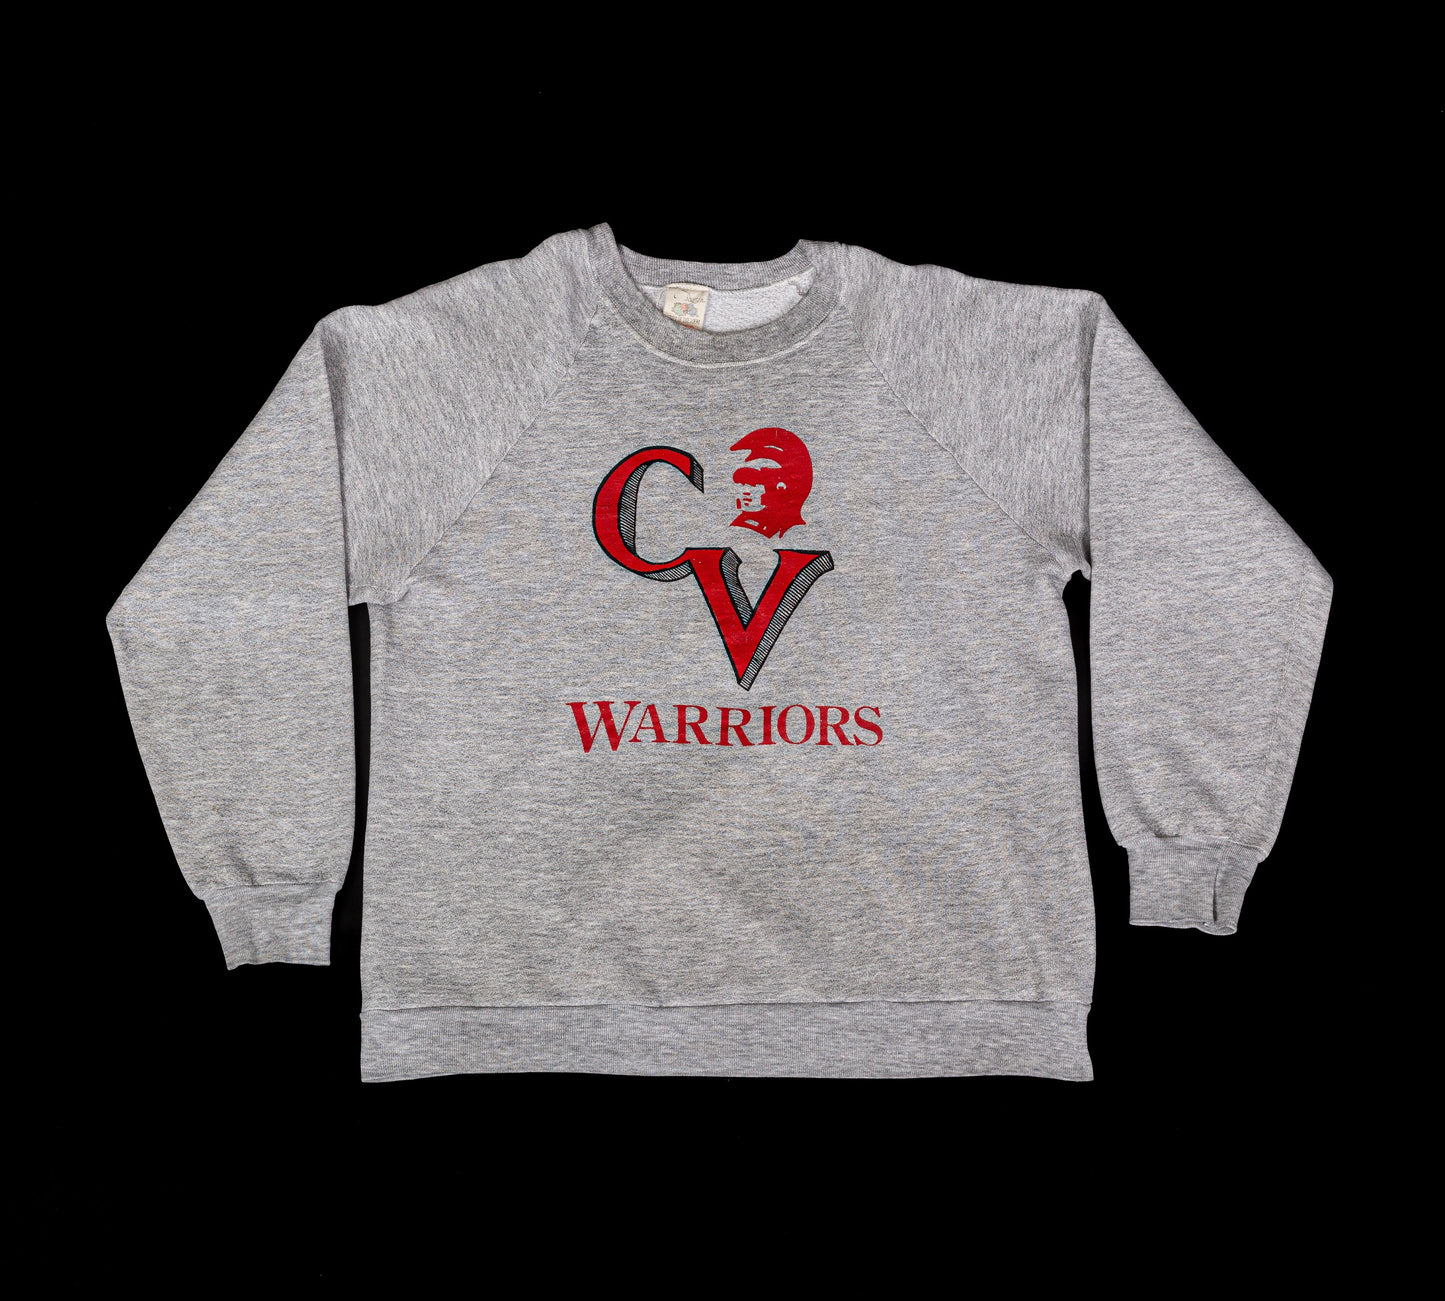 80s CV Warriors Sweatshirt - Men's Small, Women's Medium 